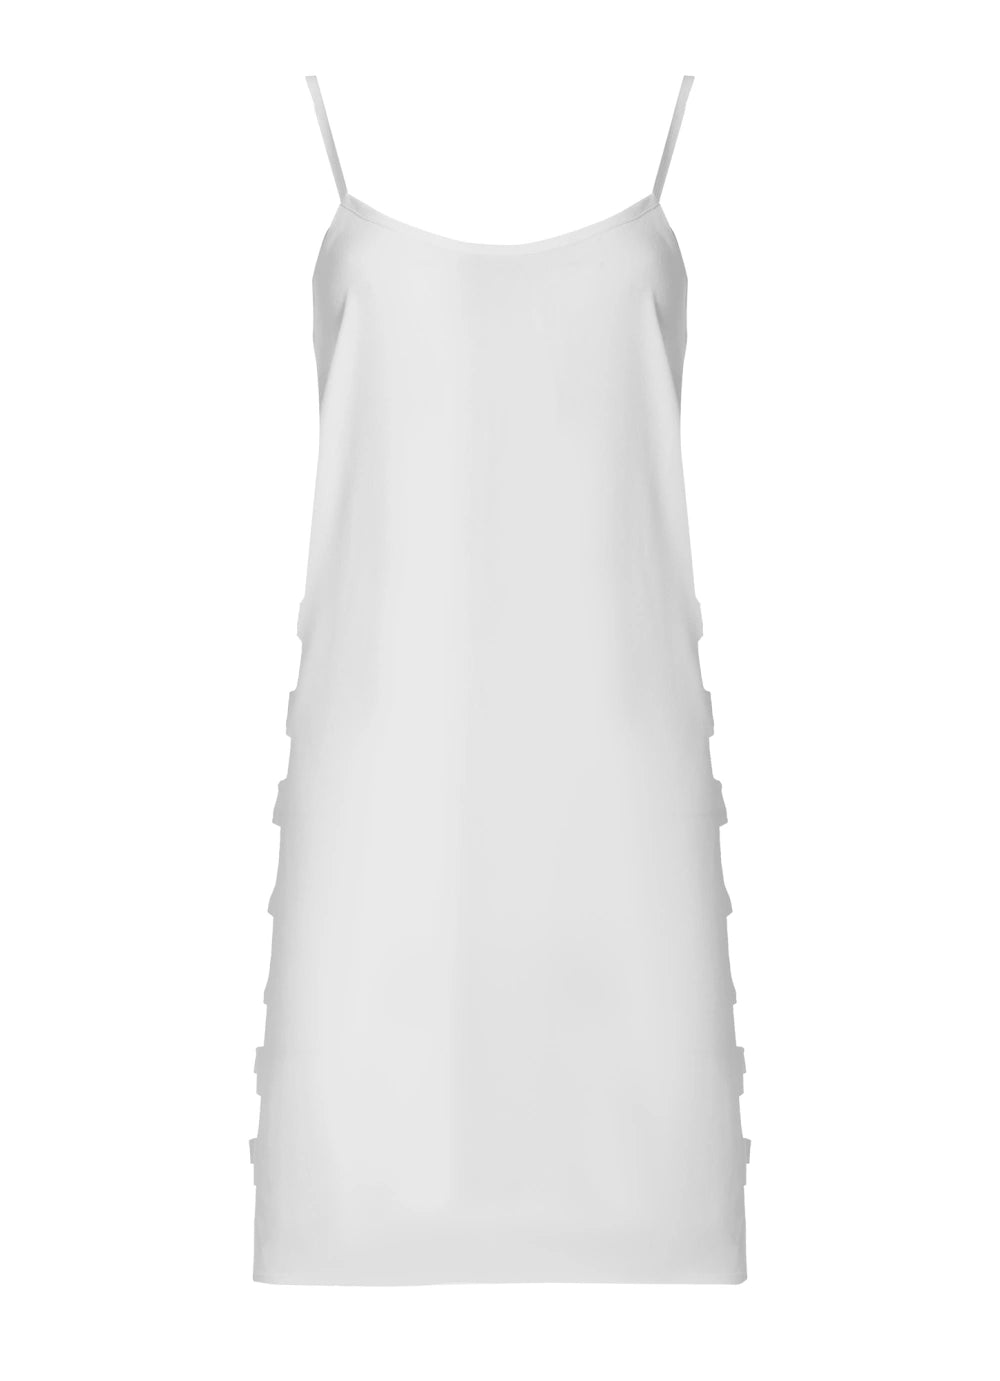 Stefania Frangista Danna white dress